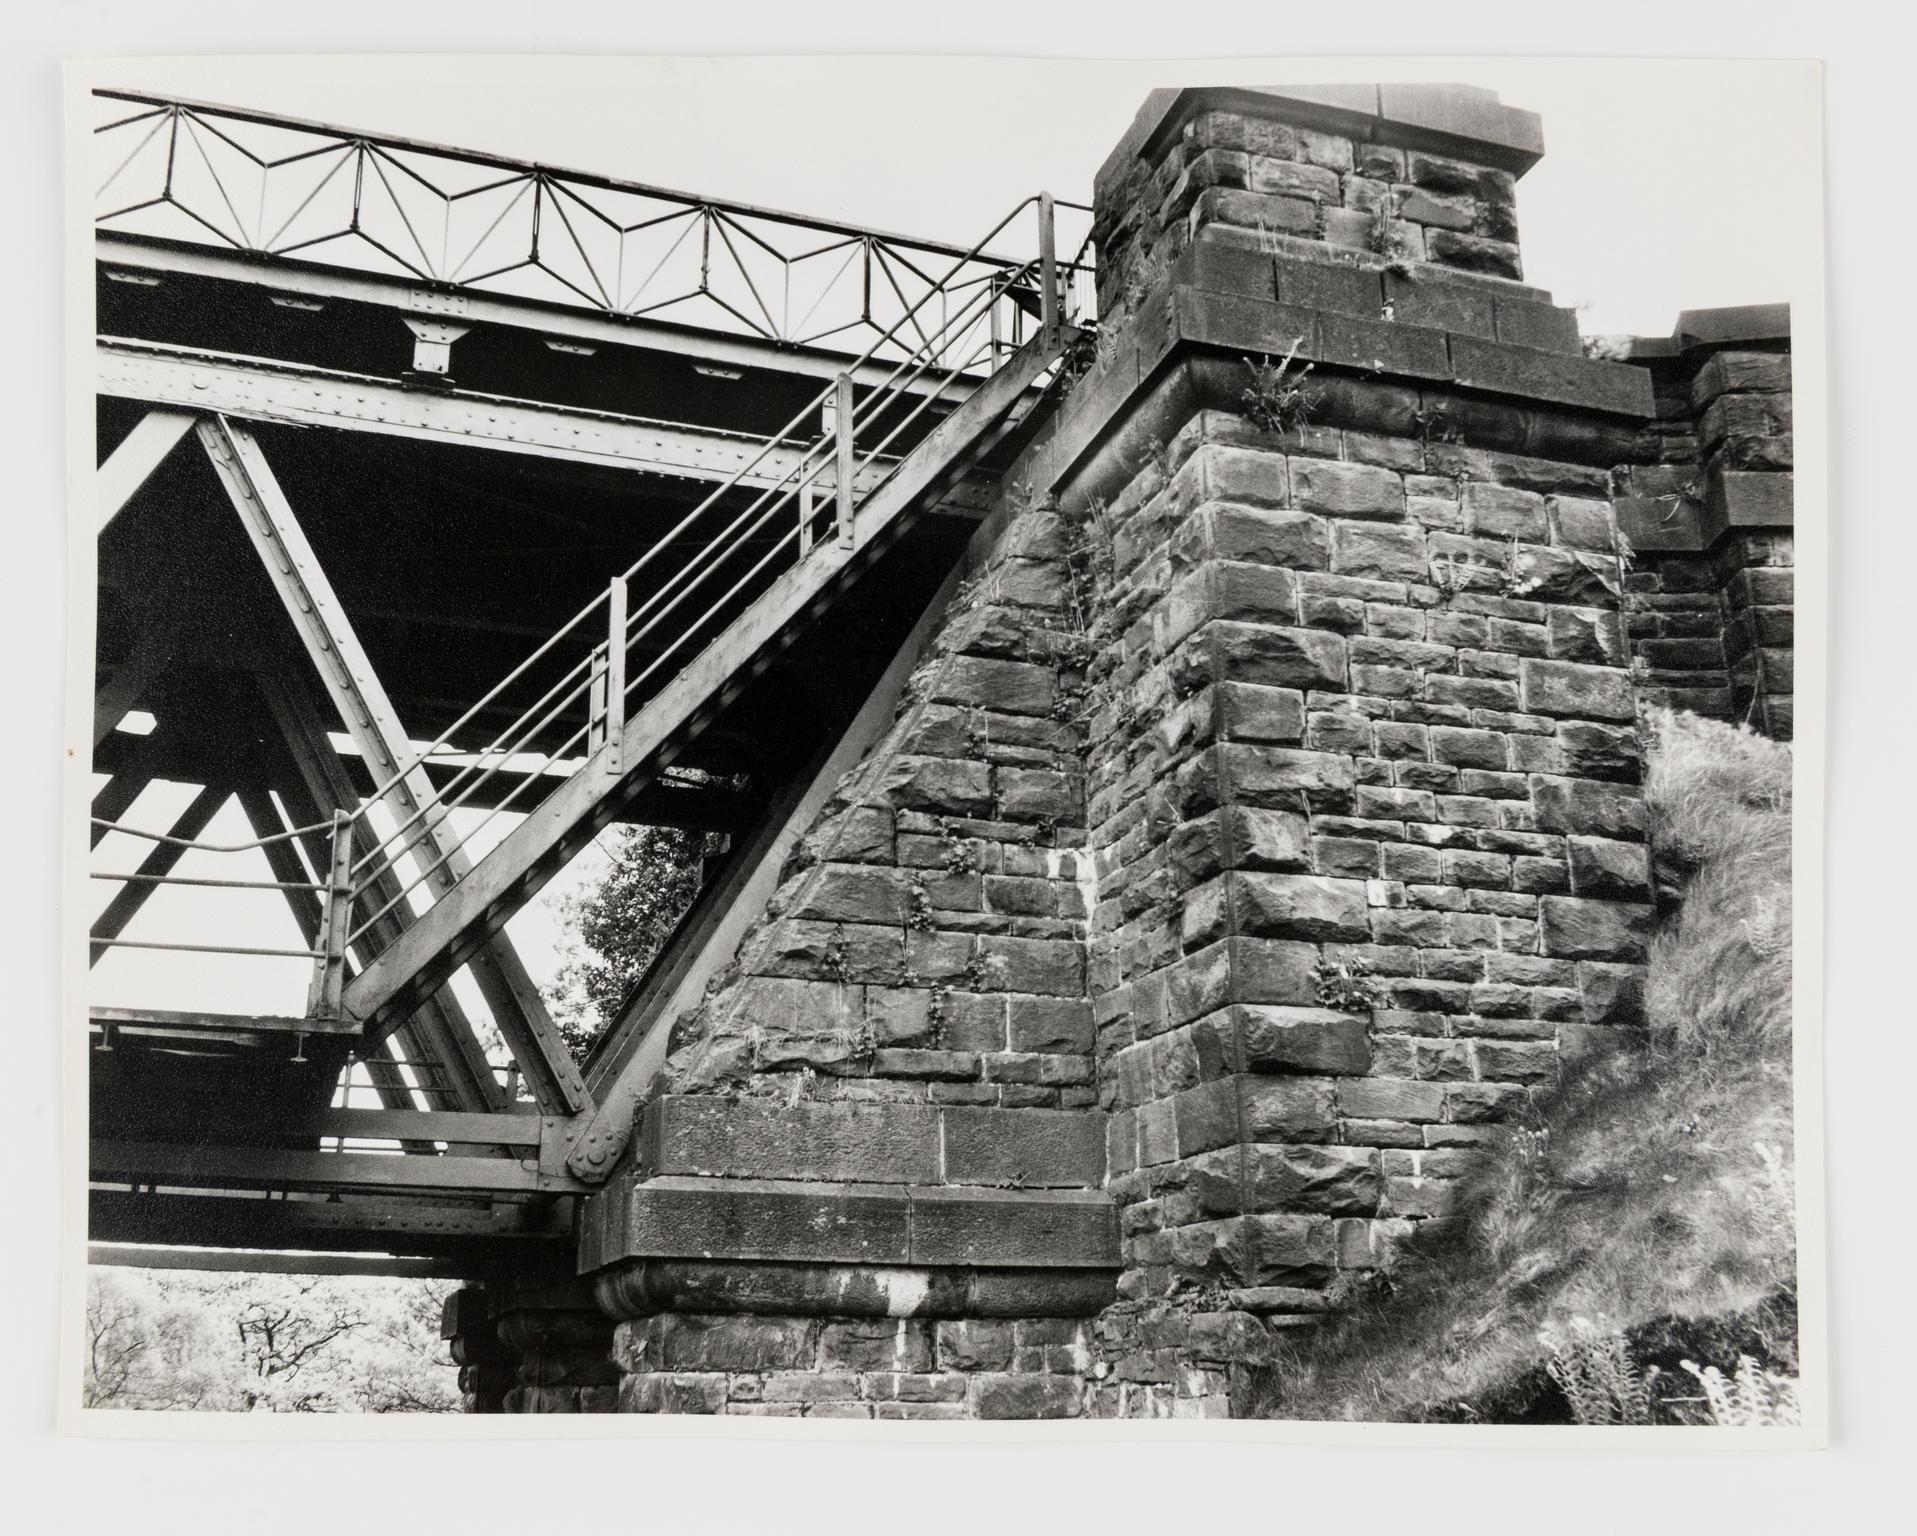 Demolition of Crumlin viaduct, photograph